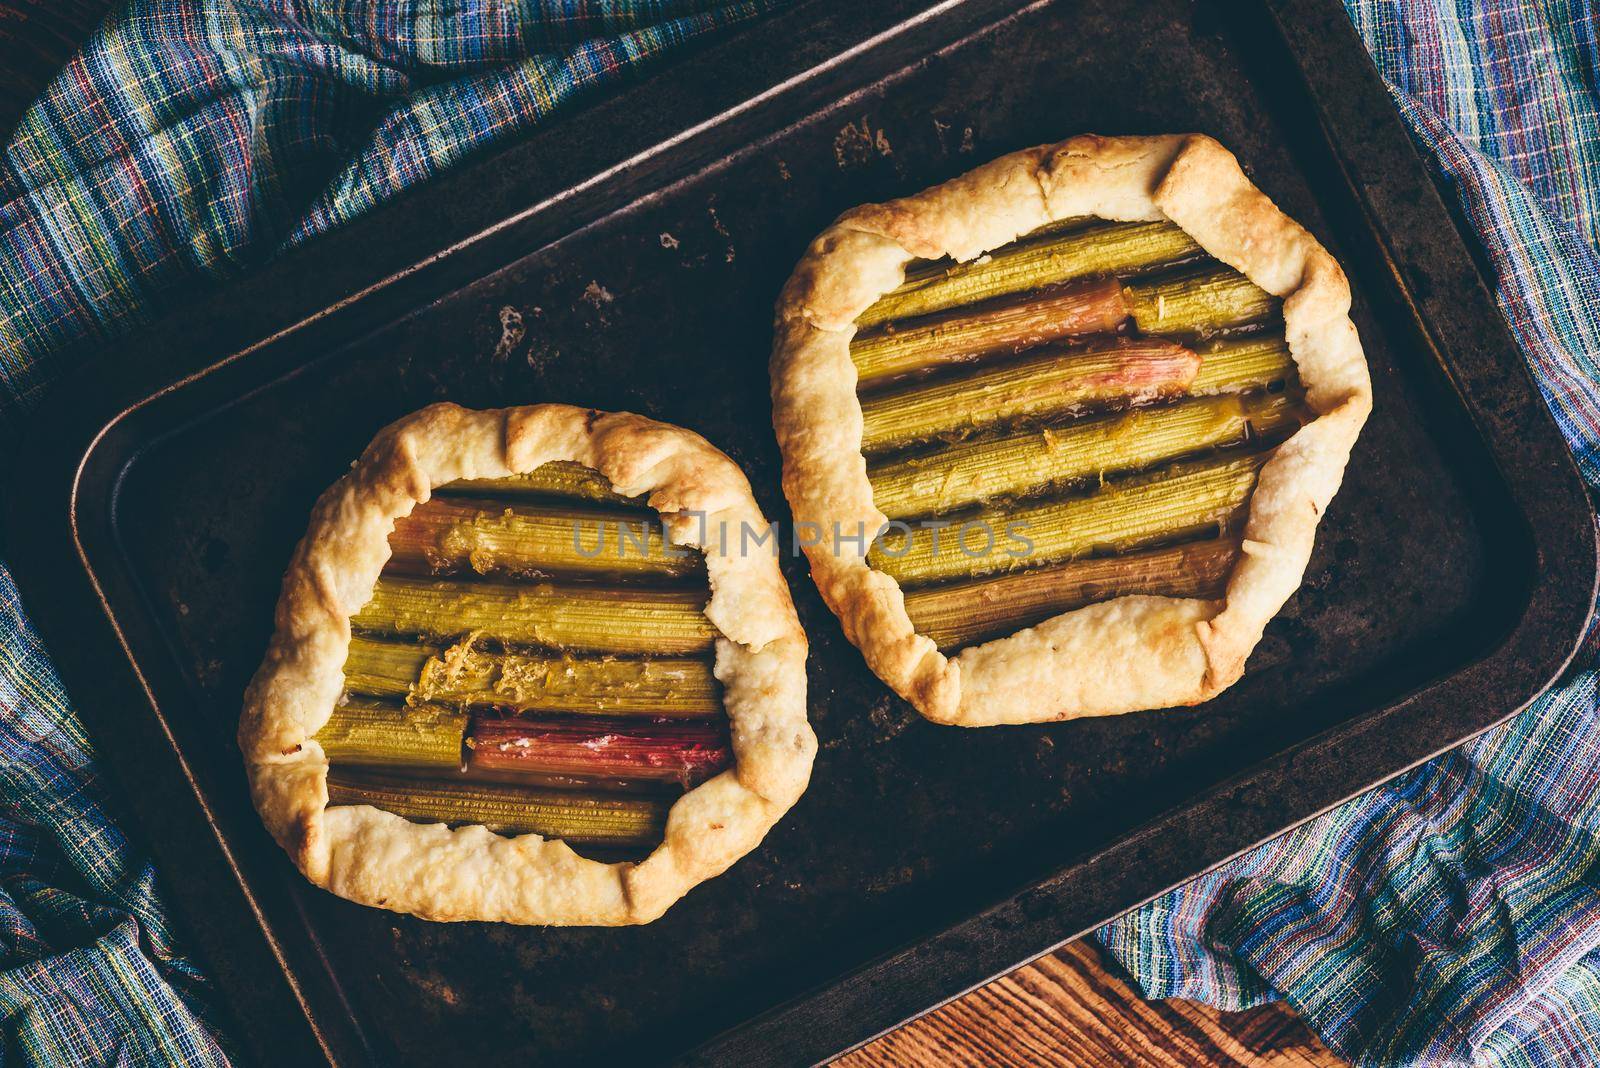 Rhubarb mini galettes on baking sheet by Seva_blsv